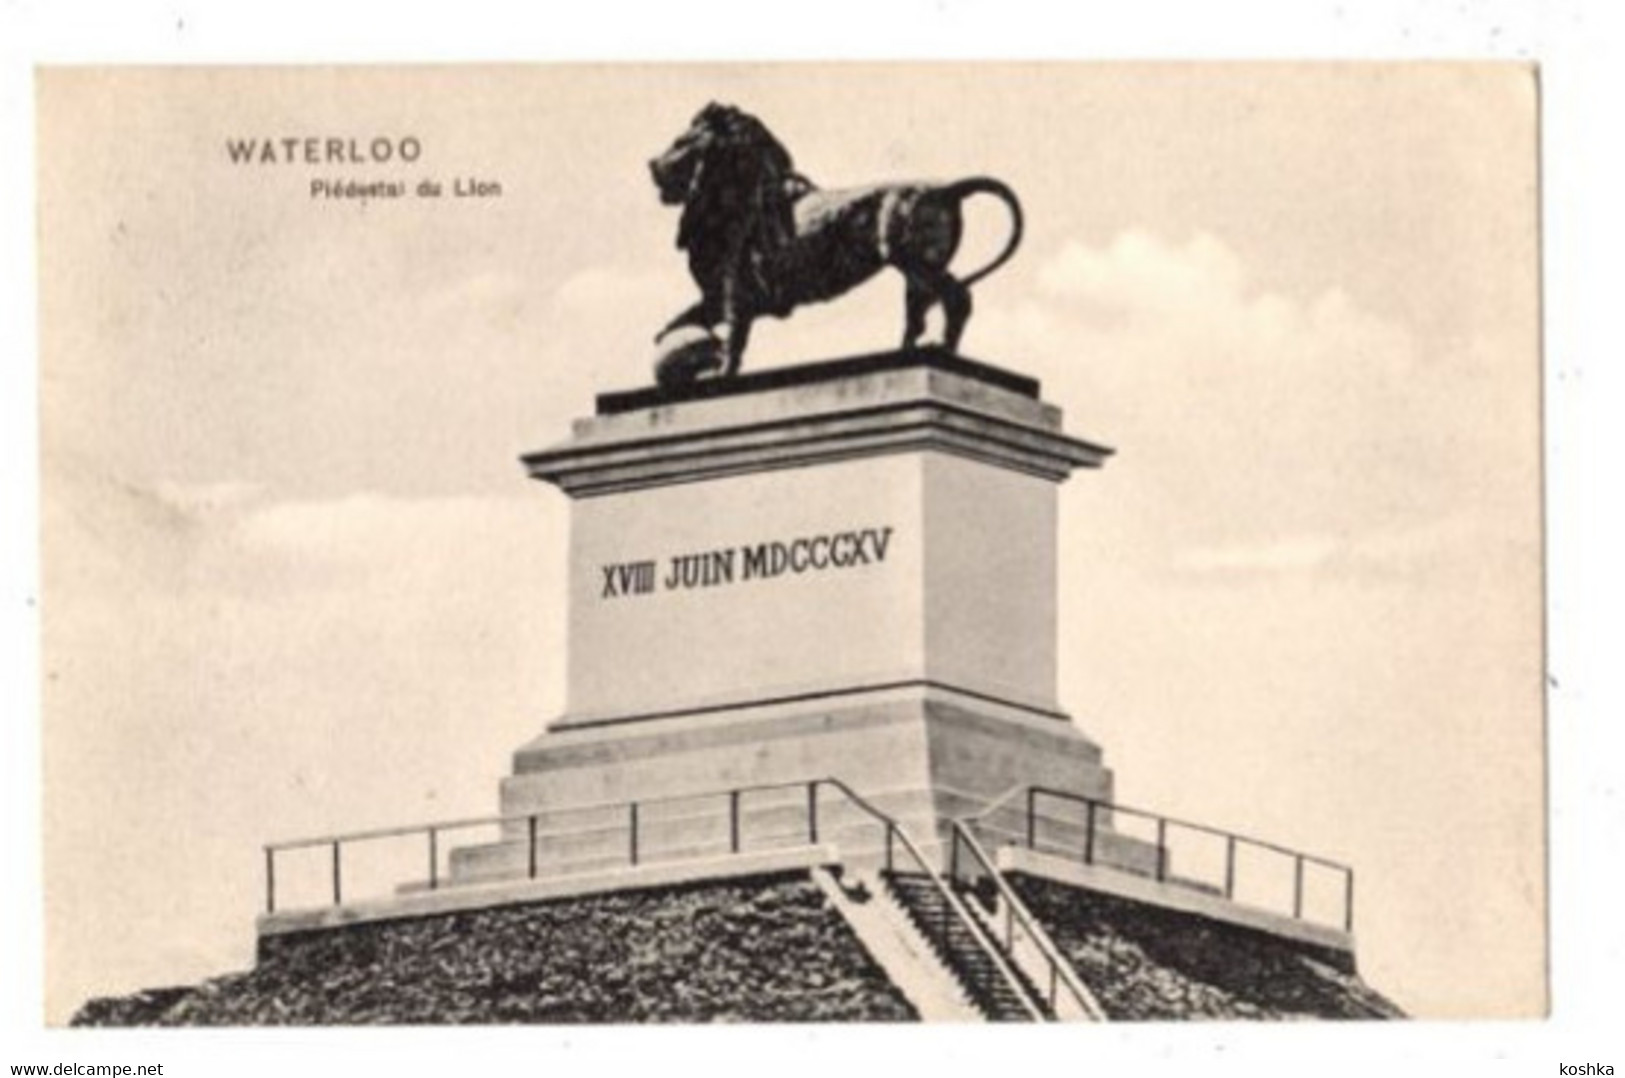 WATERLOO - Piédestal Du Lion - Envoyée En 1914 - édition TRENKLER - 08 - 36707 - Waterloo